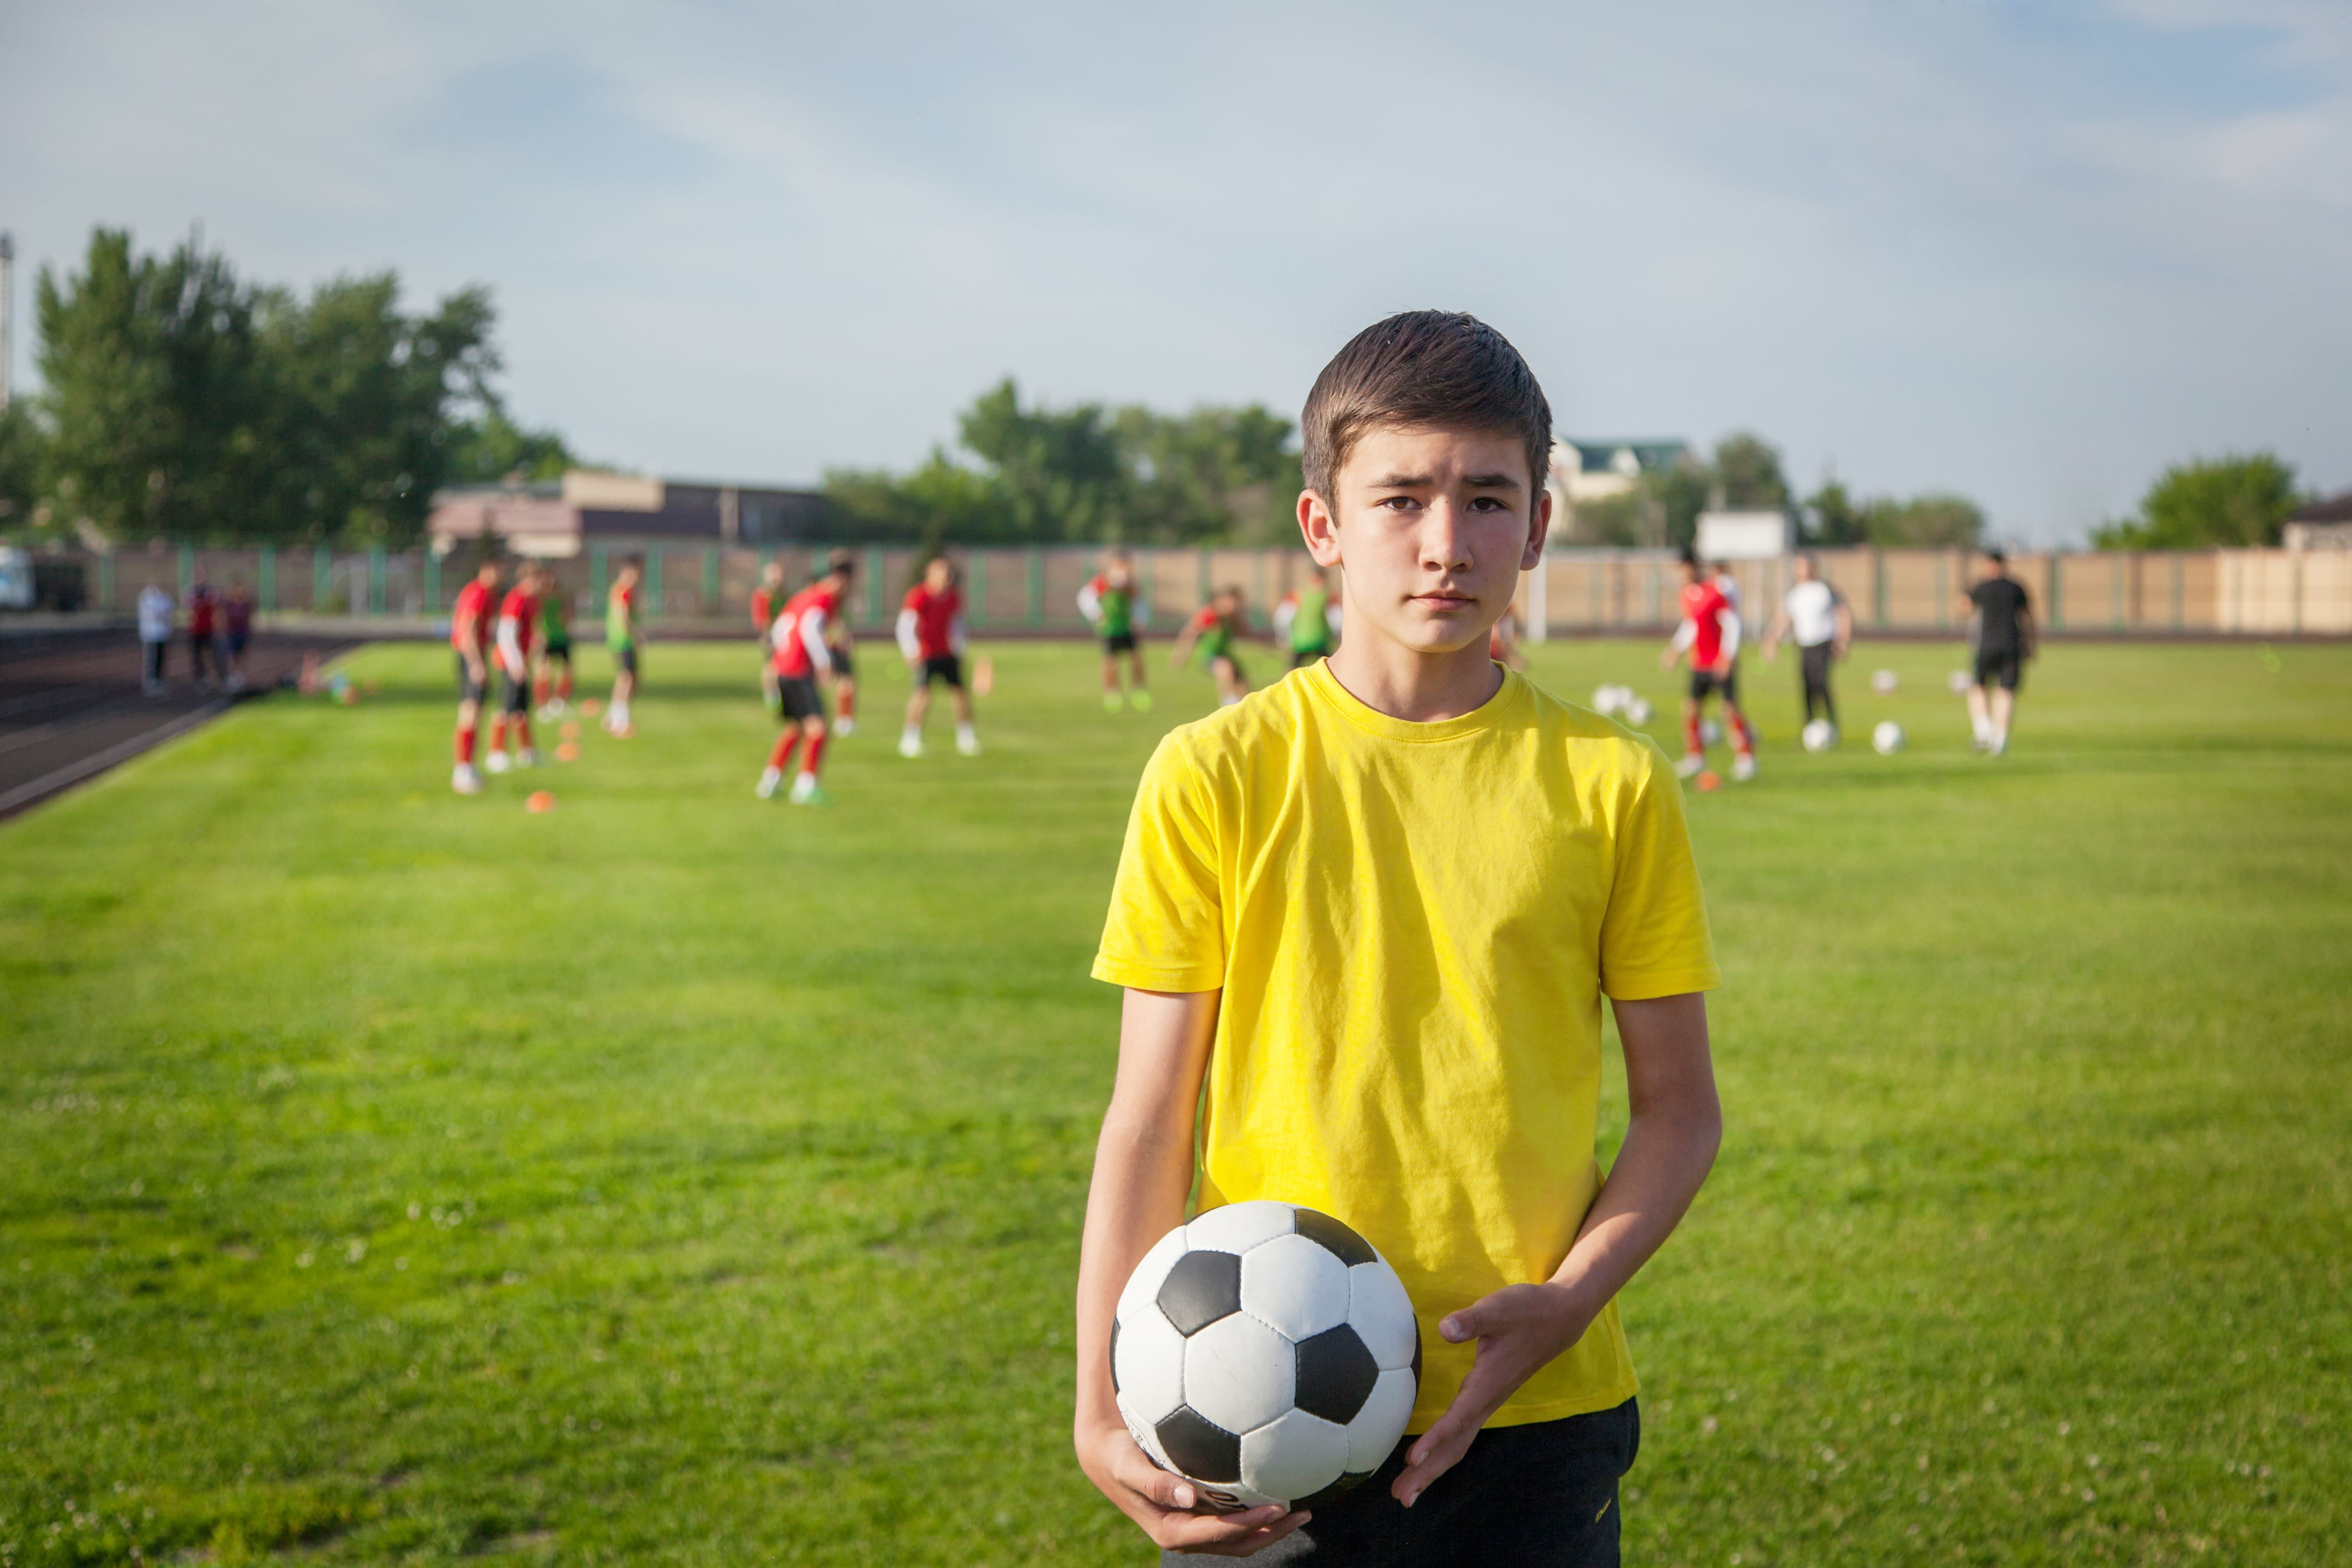 Boy in a yellow shirt on a soccer field holding soccer balls.